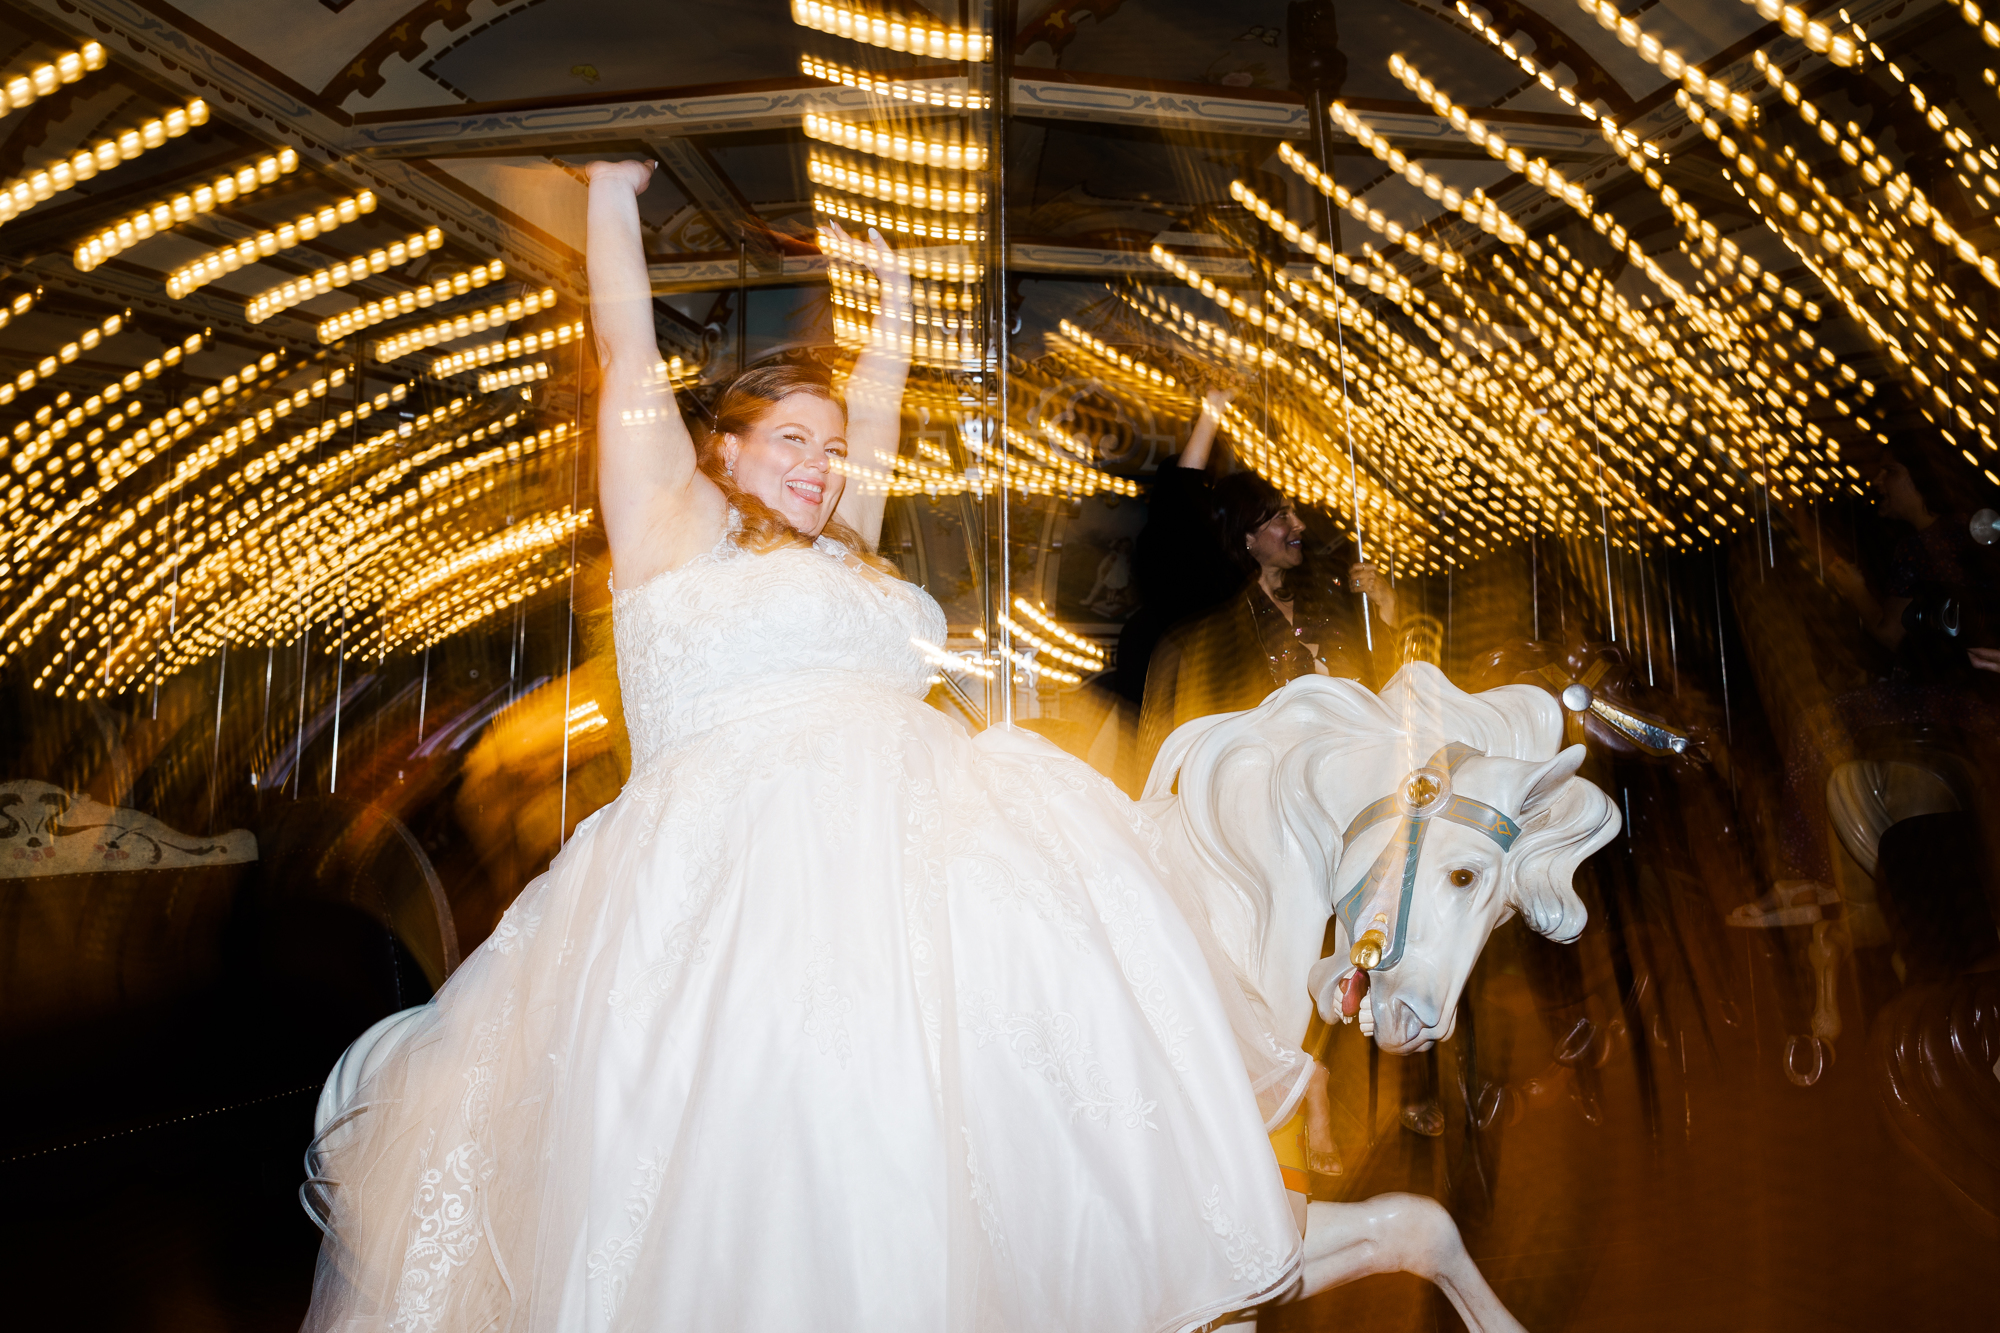 Intimate Jane's Carousel Wedding in New York